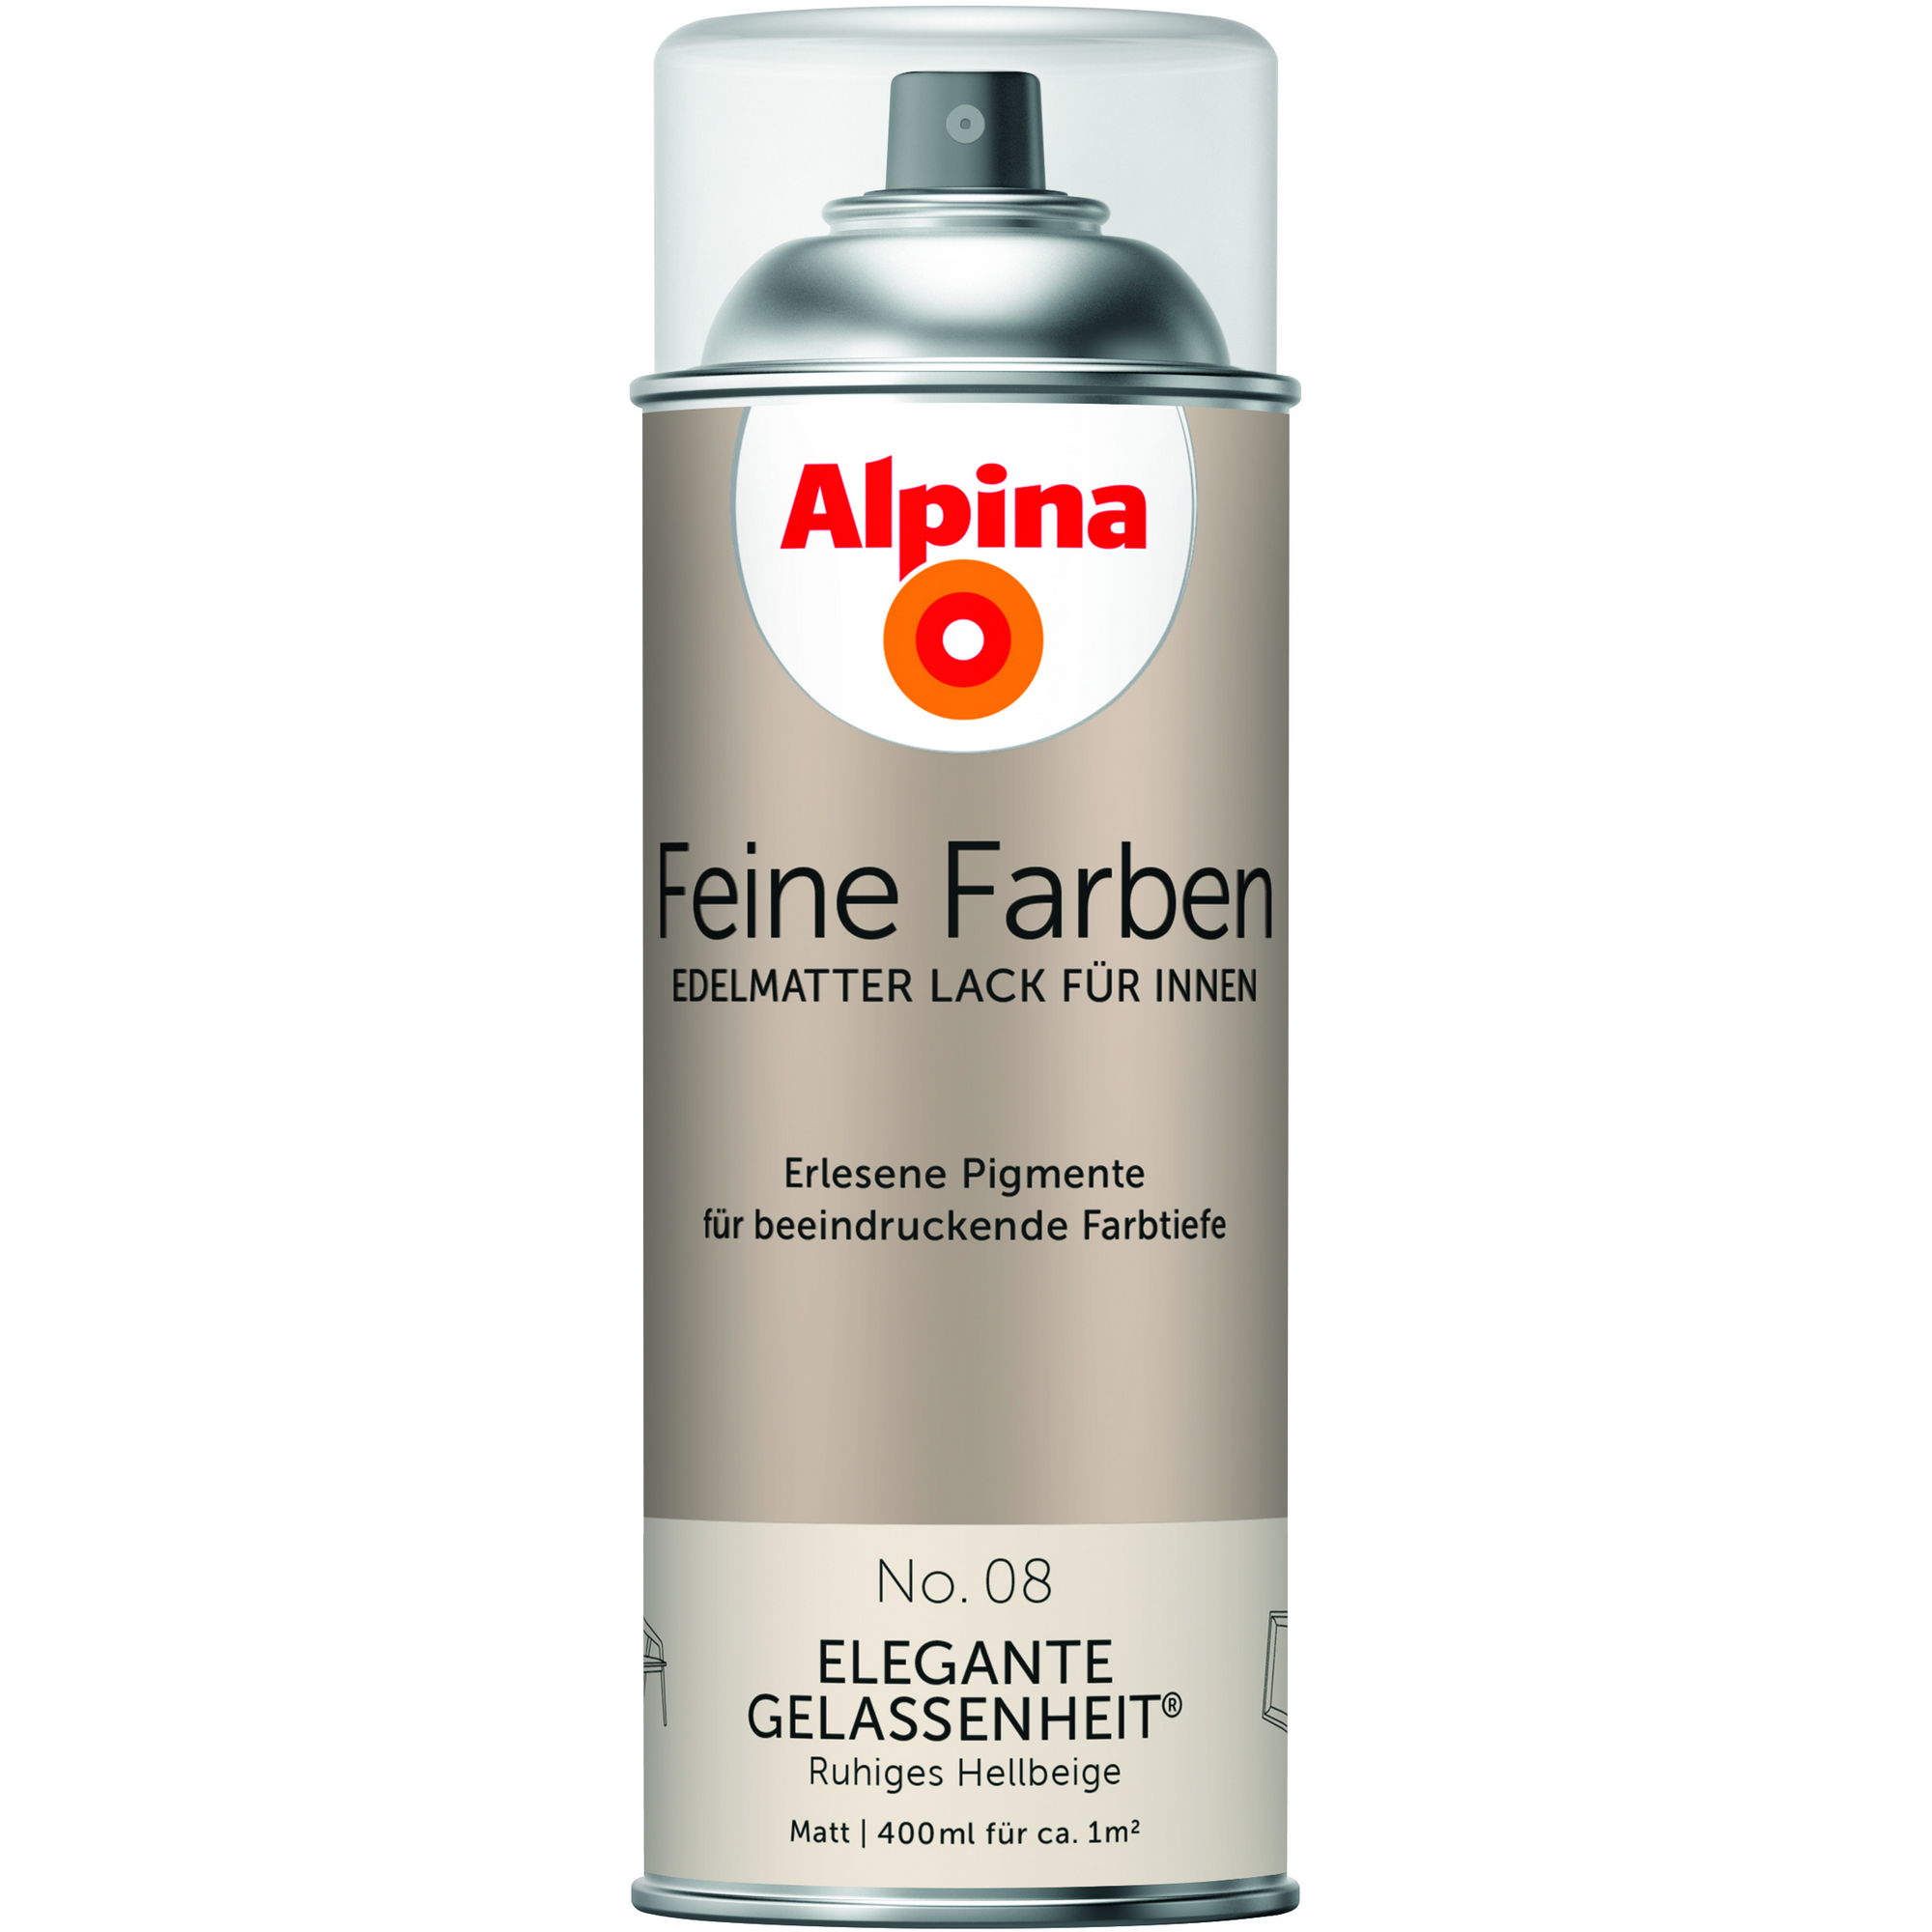 Feine Farben 'Elegante Gelassenheit' hellbeige matt 400 ml + product picture